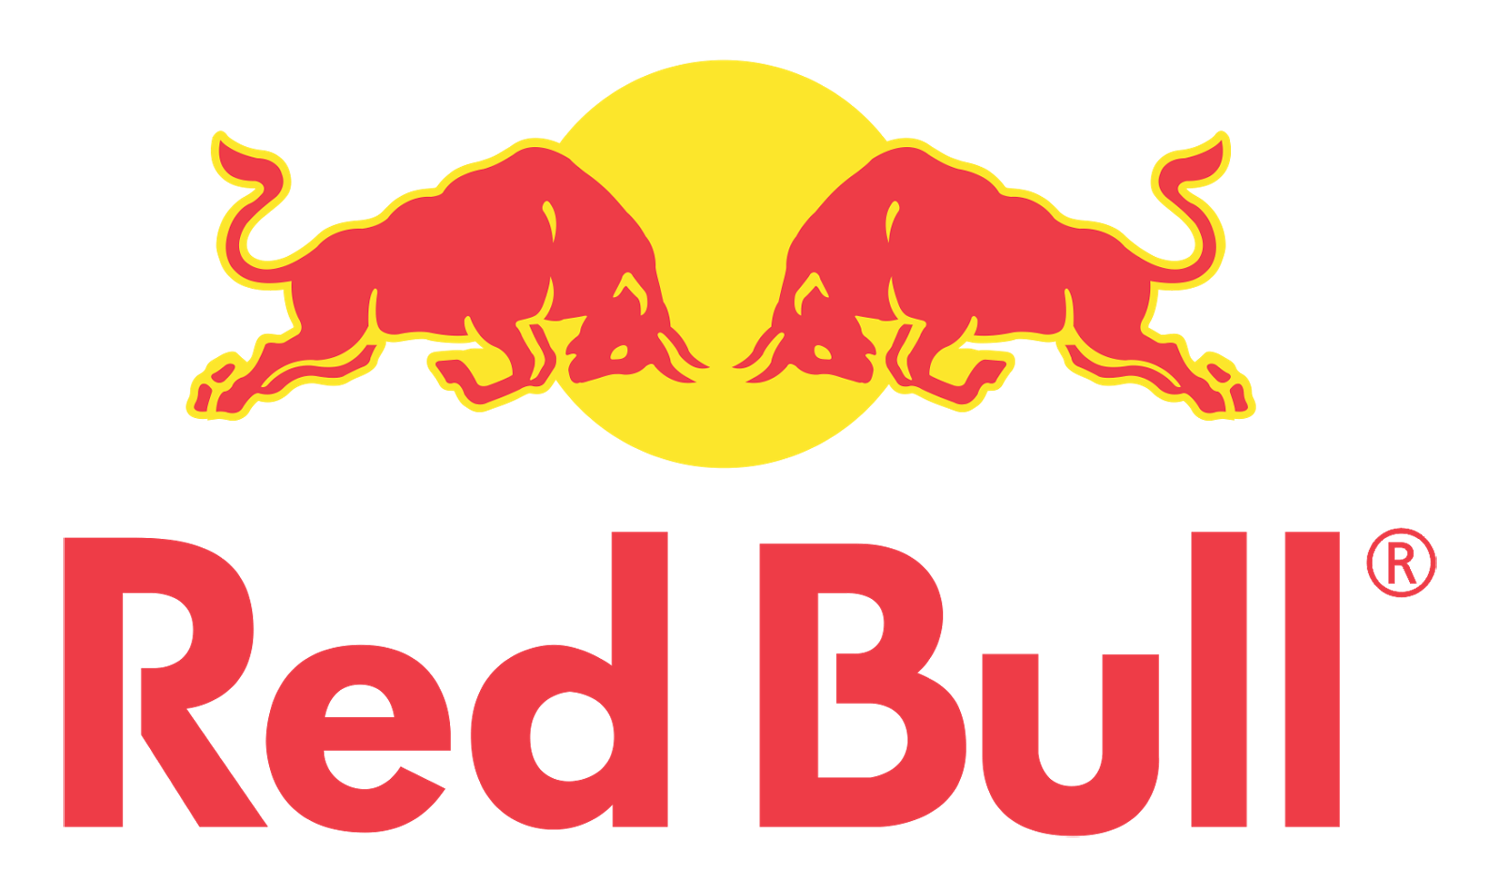 Red Bull Energy Drink Logo - Red Bull Logo, Red Bull Symbol, Meaning, History and Evolution